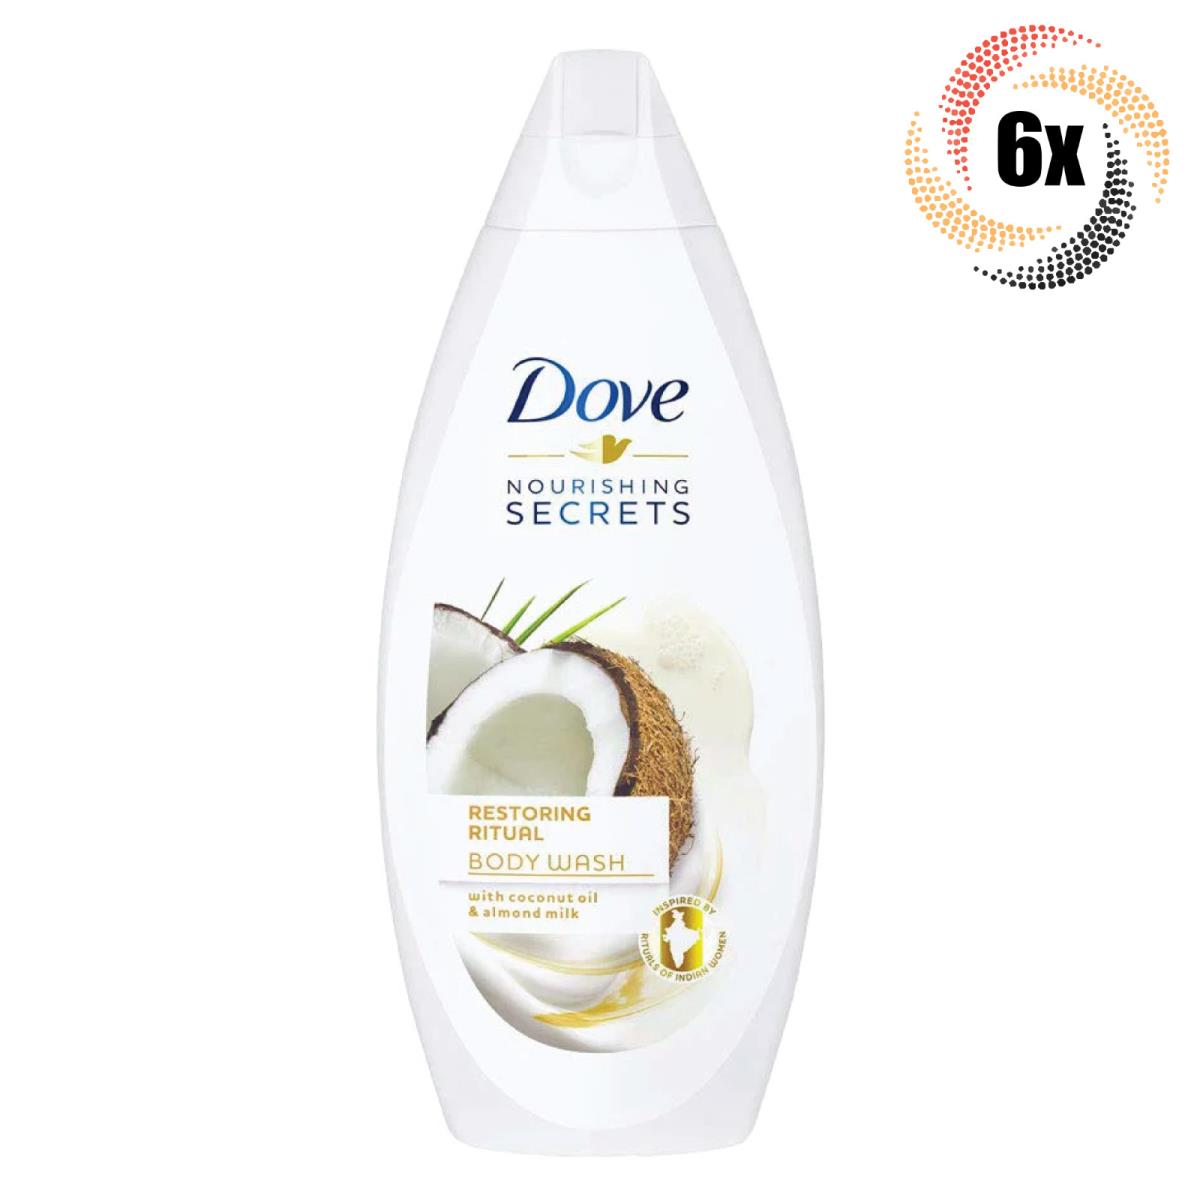 6x Bottles Dove Nourishing Secrets Restoring Ritual Body Wash 500ml 0% Sulfate